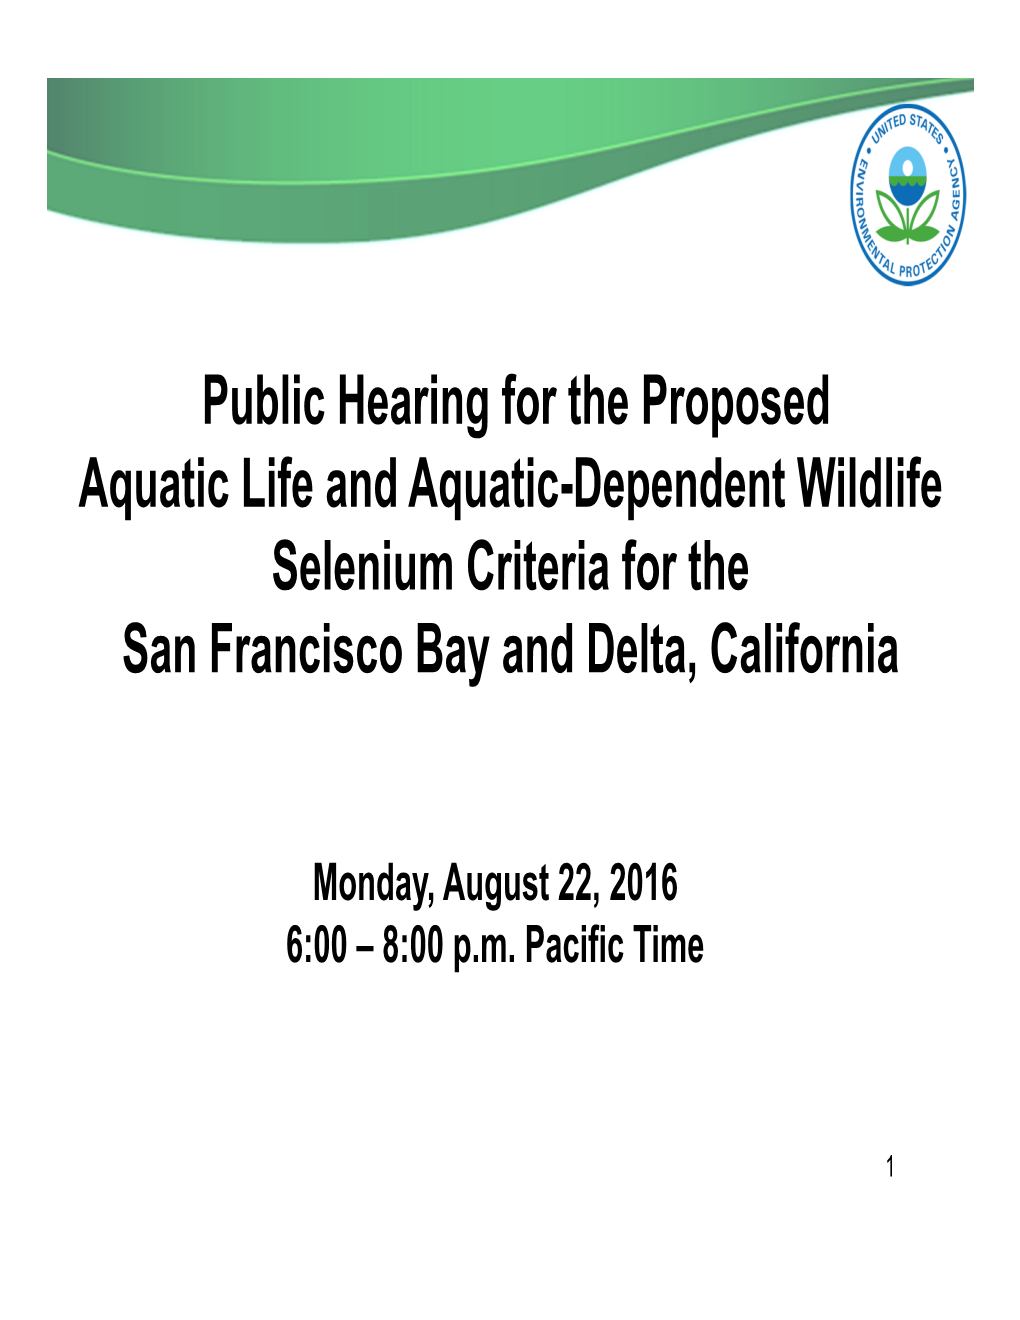 Public Hearing for the Proposed Aquatic Life and Aquatic-Dependent Wildlife Selenium Criteria for the San Francisco Bay and Delta, California